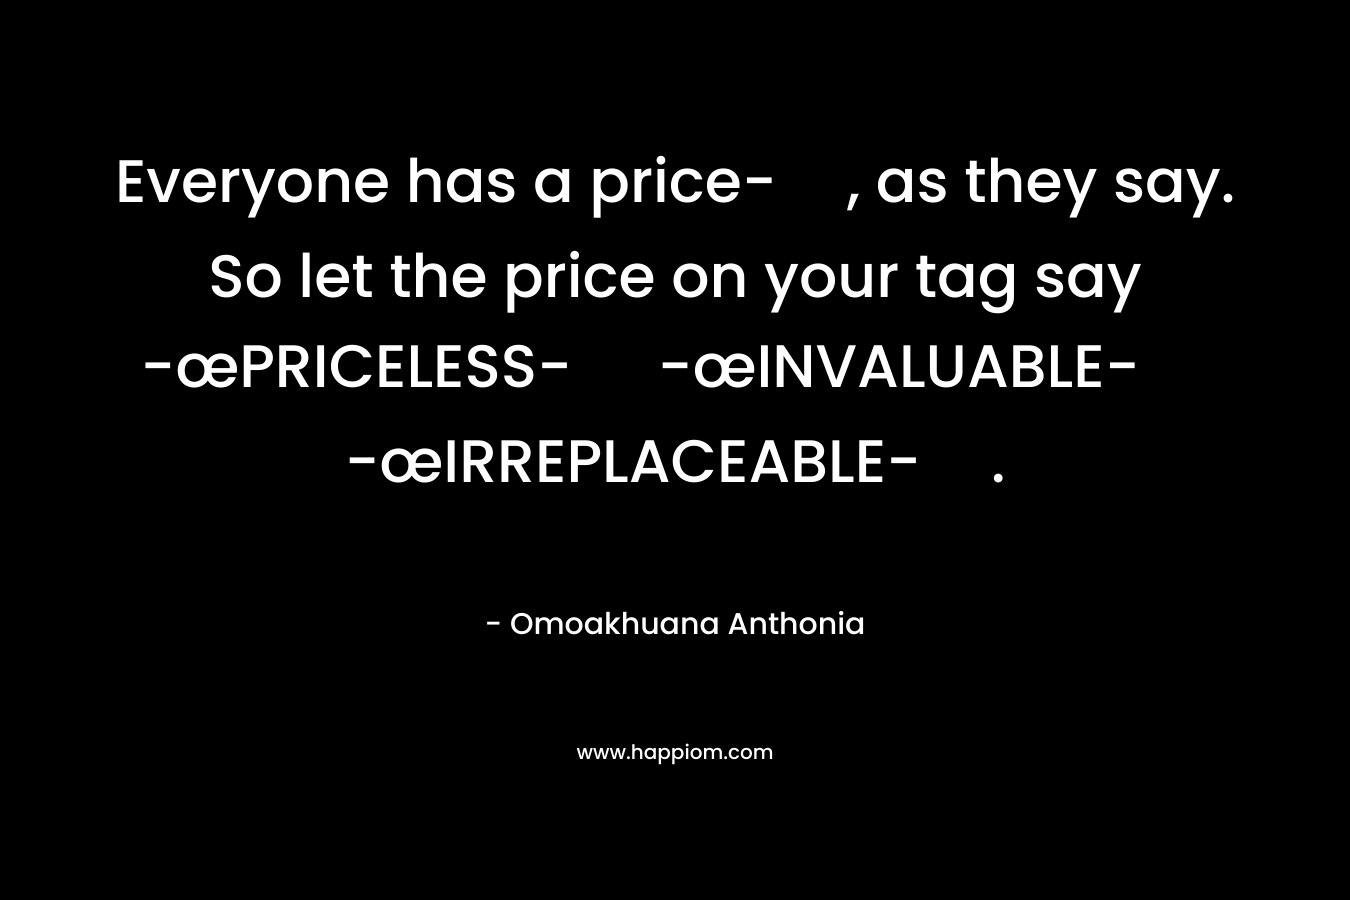 Everyone has a price-, as they say. So let the price on your tag say -œPRICELESS- -œINVALUABLE- -œIRREPLACEABLE-. – Omoakhuana Anthonia